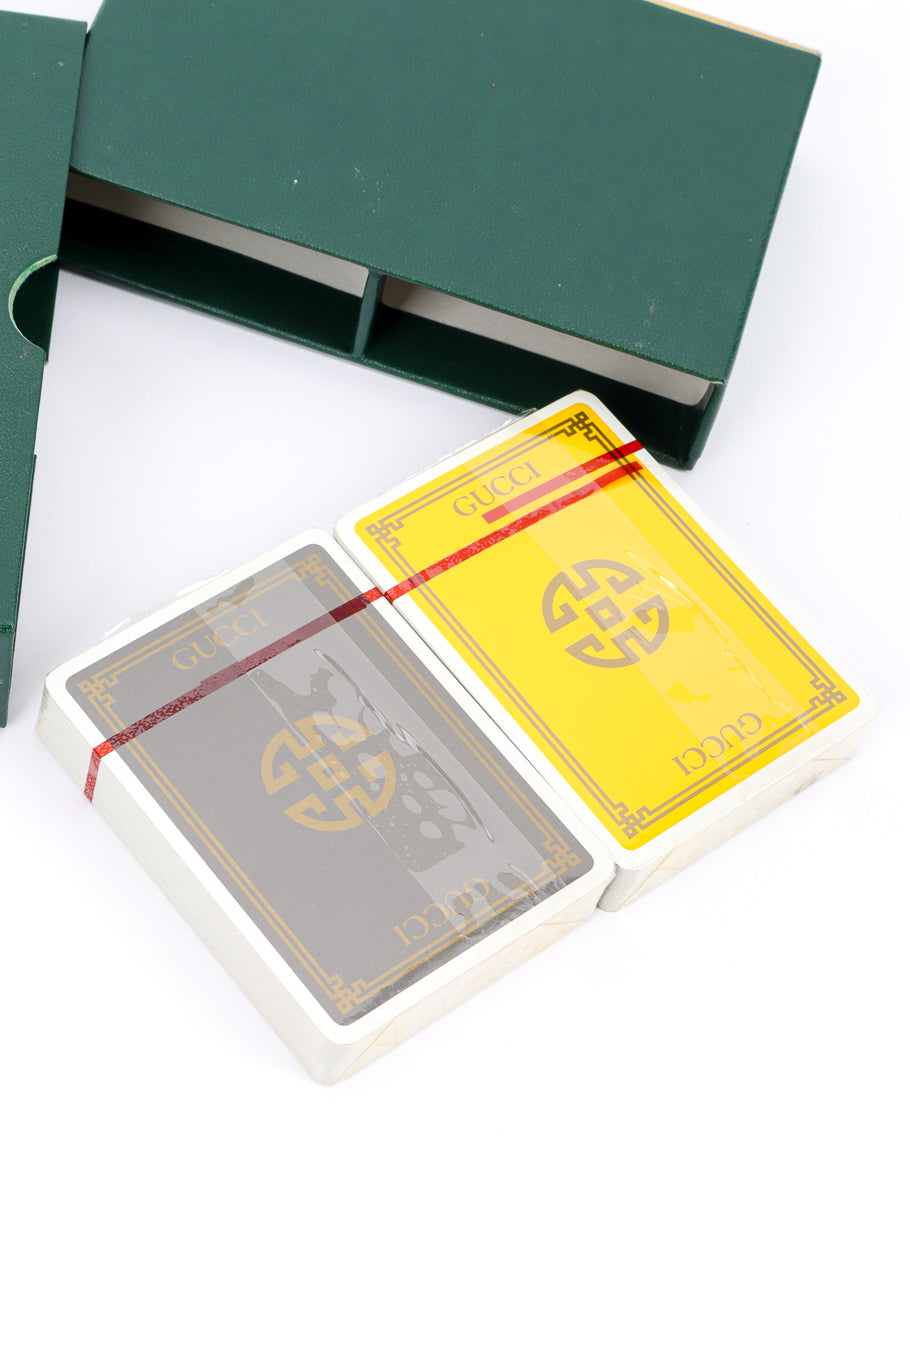 Vintage Gucci Yellow and Grey 2 Deck Playing Card Set deck closeup @recessla